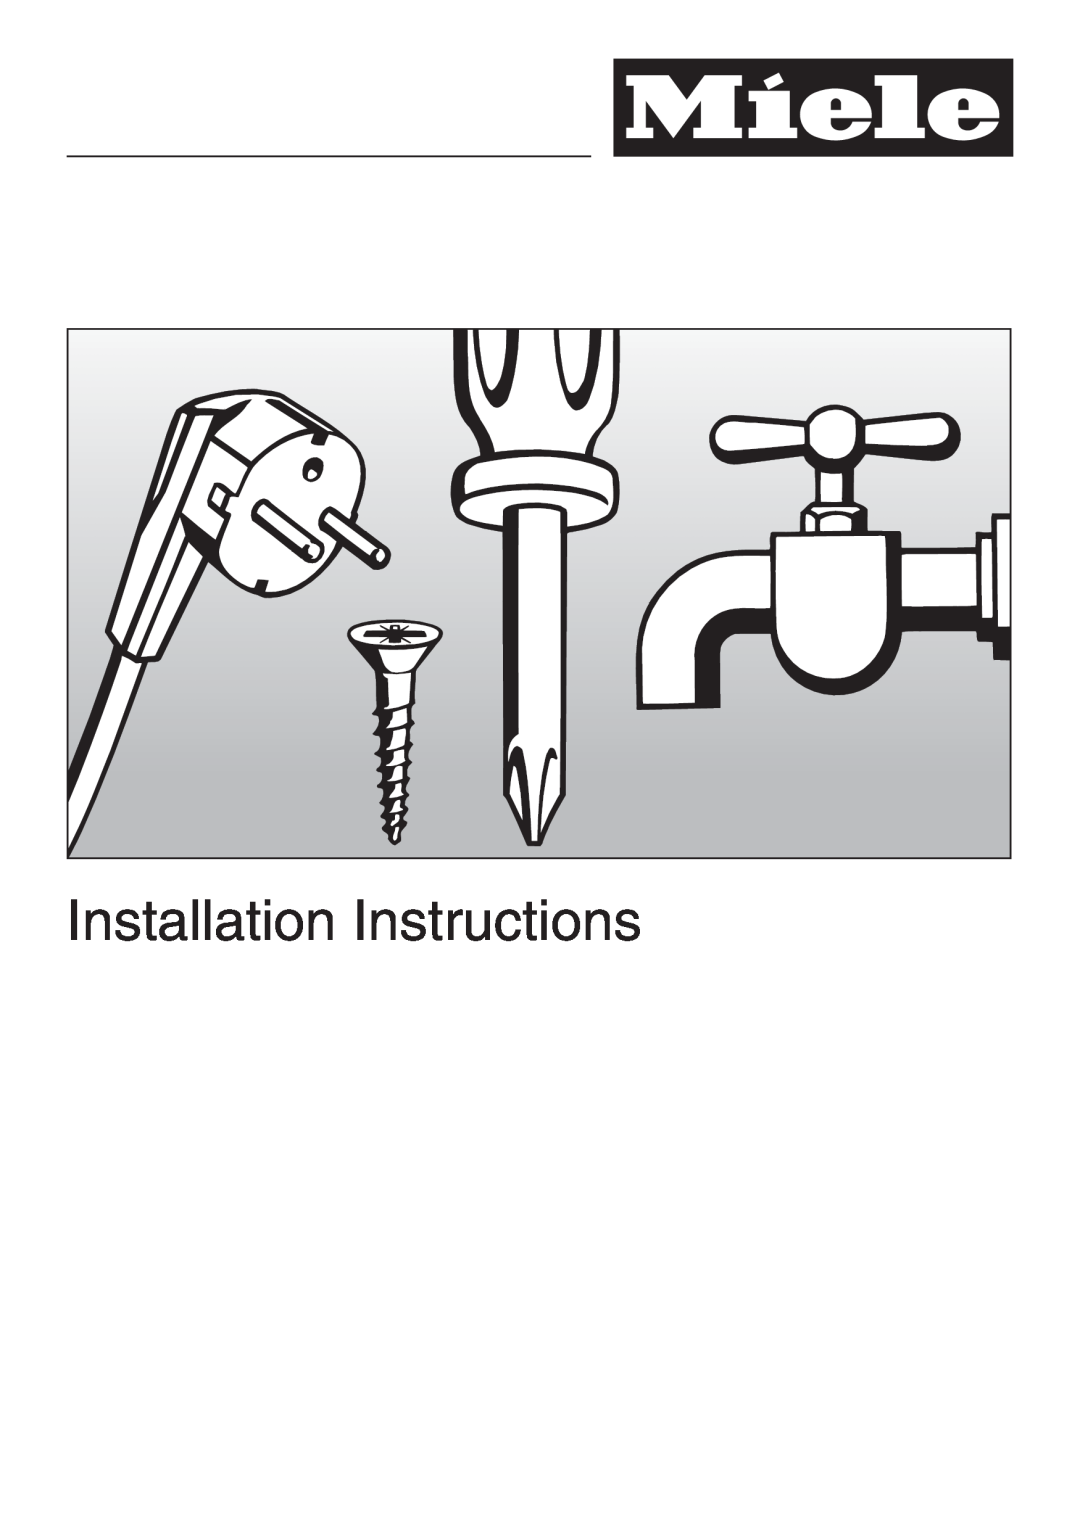 Miele CVA 4070 installation instructions Installation Instructions 